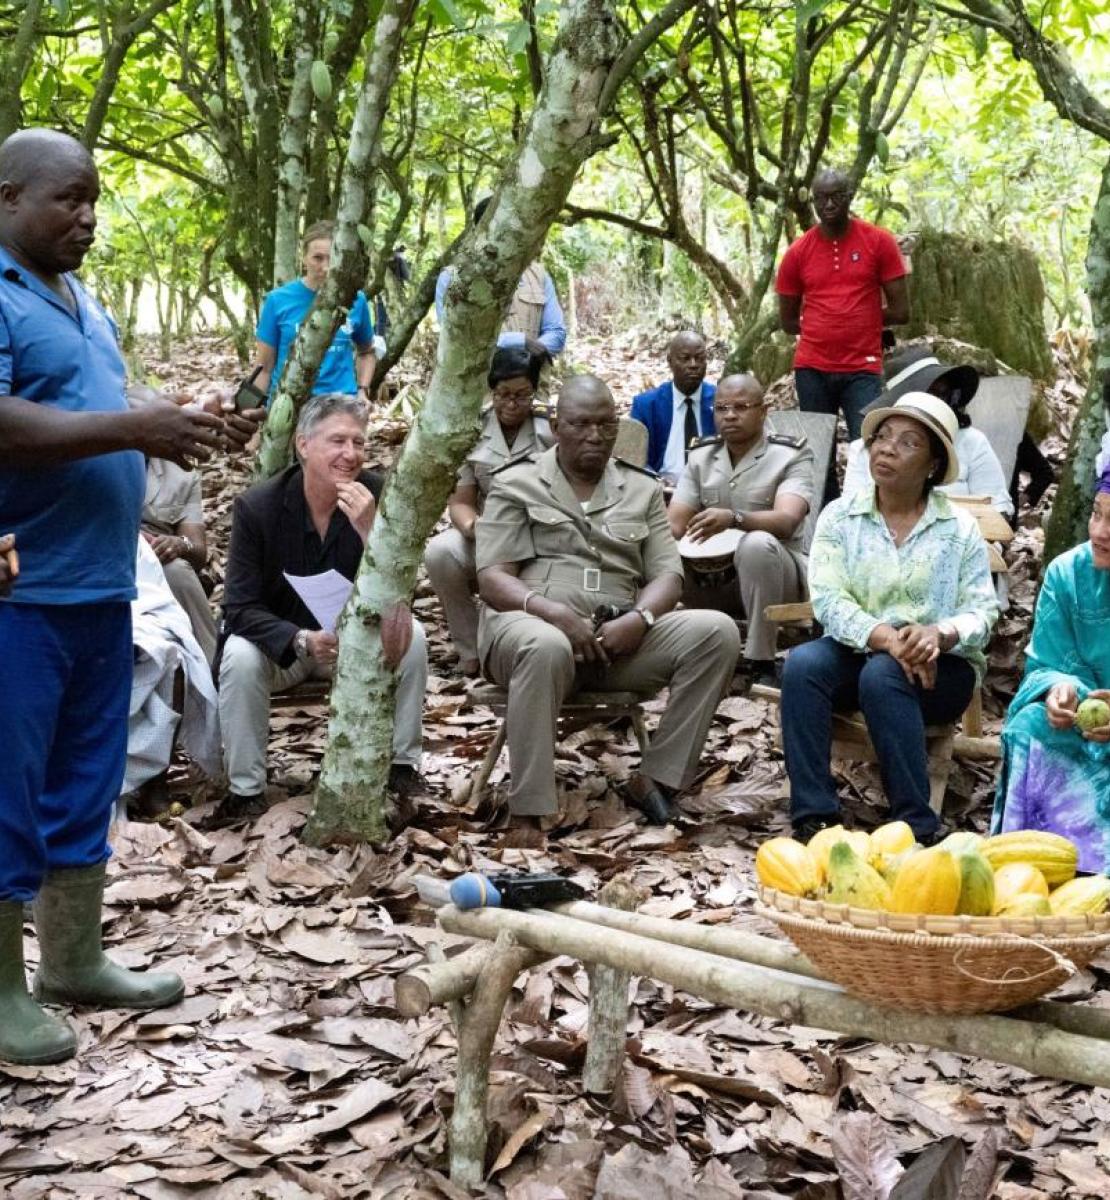 The UN Deputy Secretary-General speaks with cocoa farmers in a "Champ-École" ("Farming Training Project”) in Kouakoukoro, Soubré, Côte d'Ivoire.